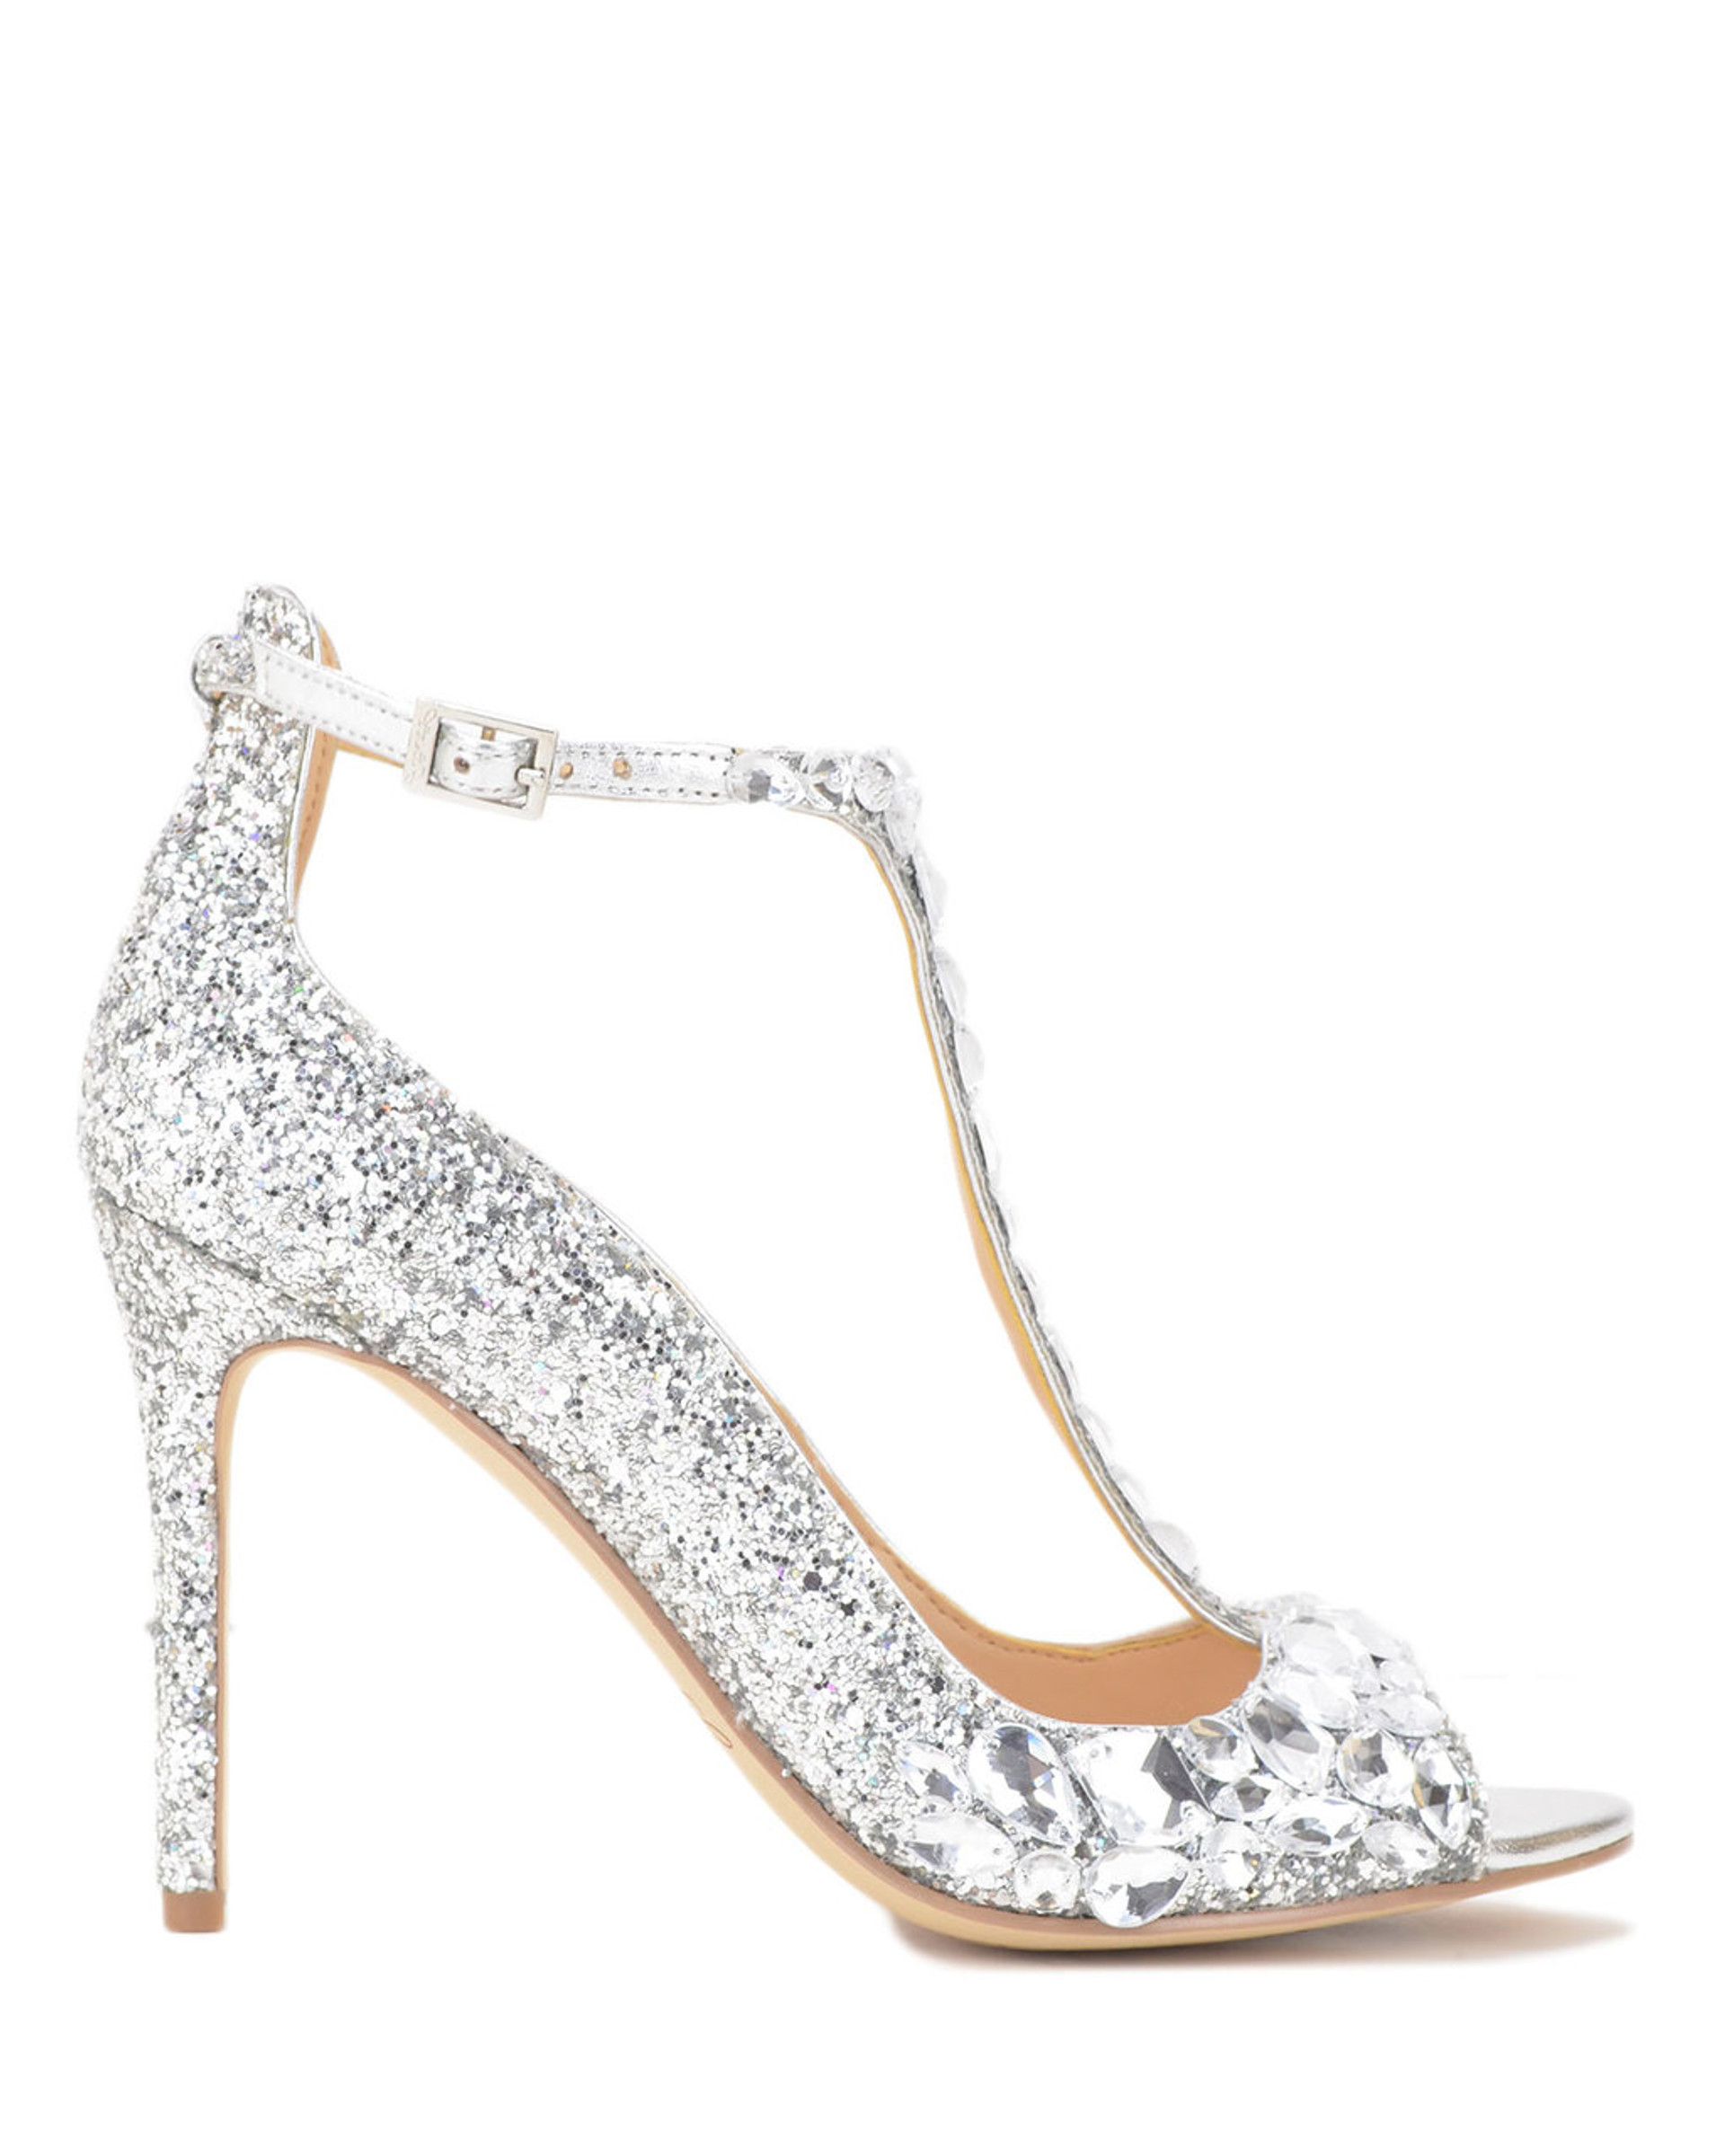 Conroy Metallic Glitter Evening Shoe from Jewel by Badgley Mischka